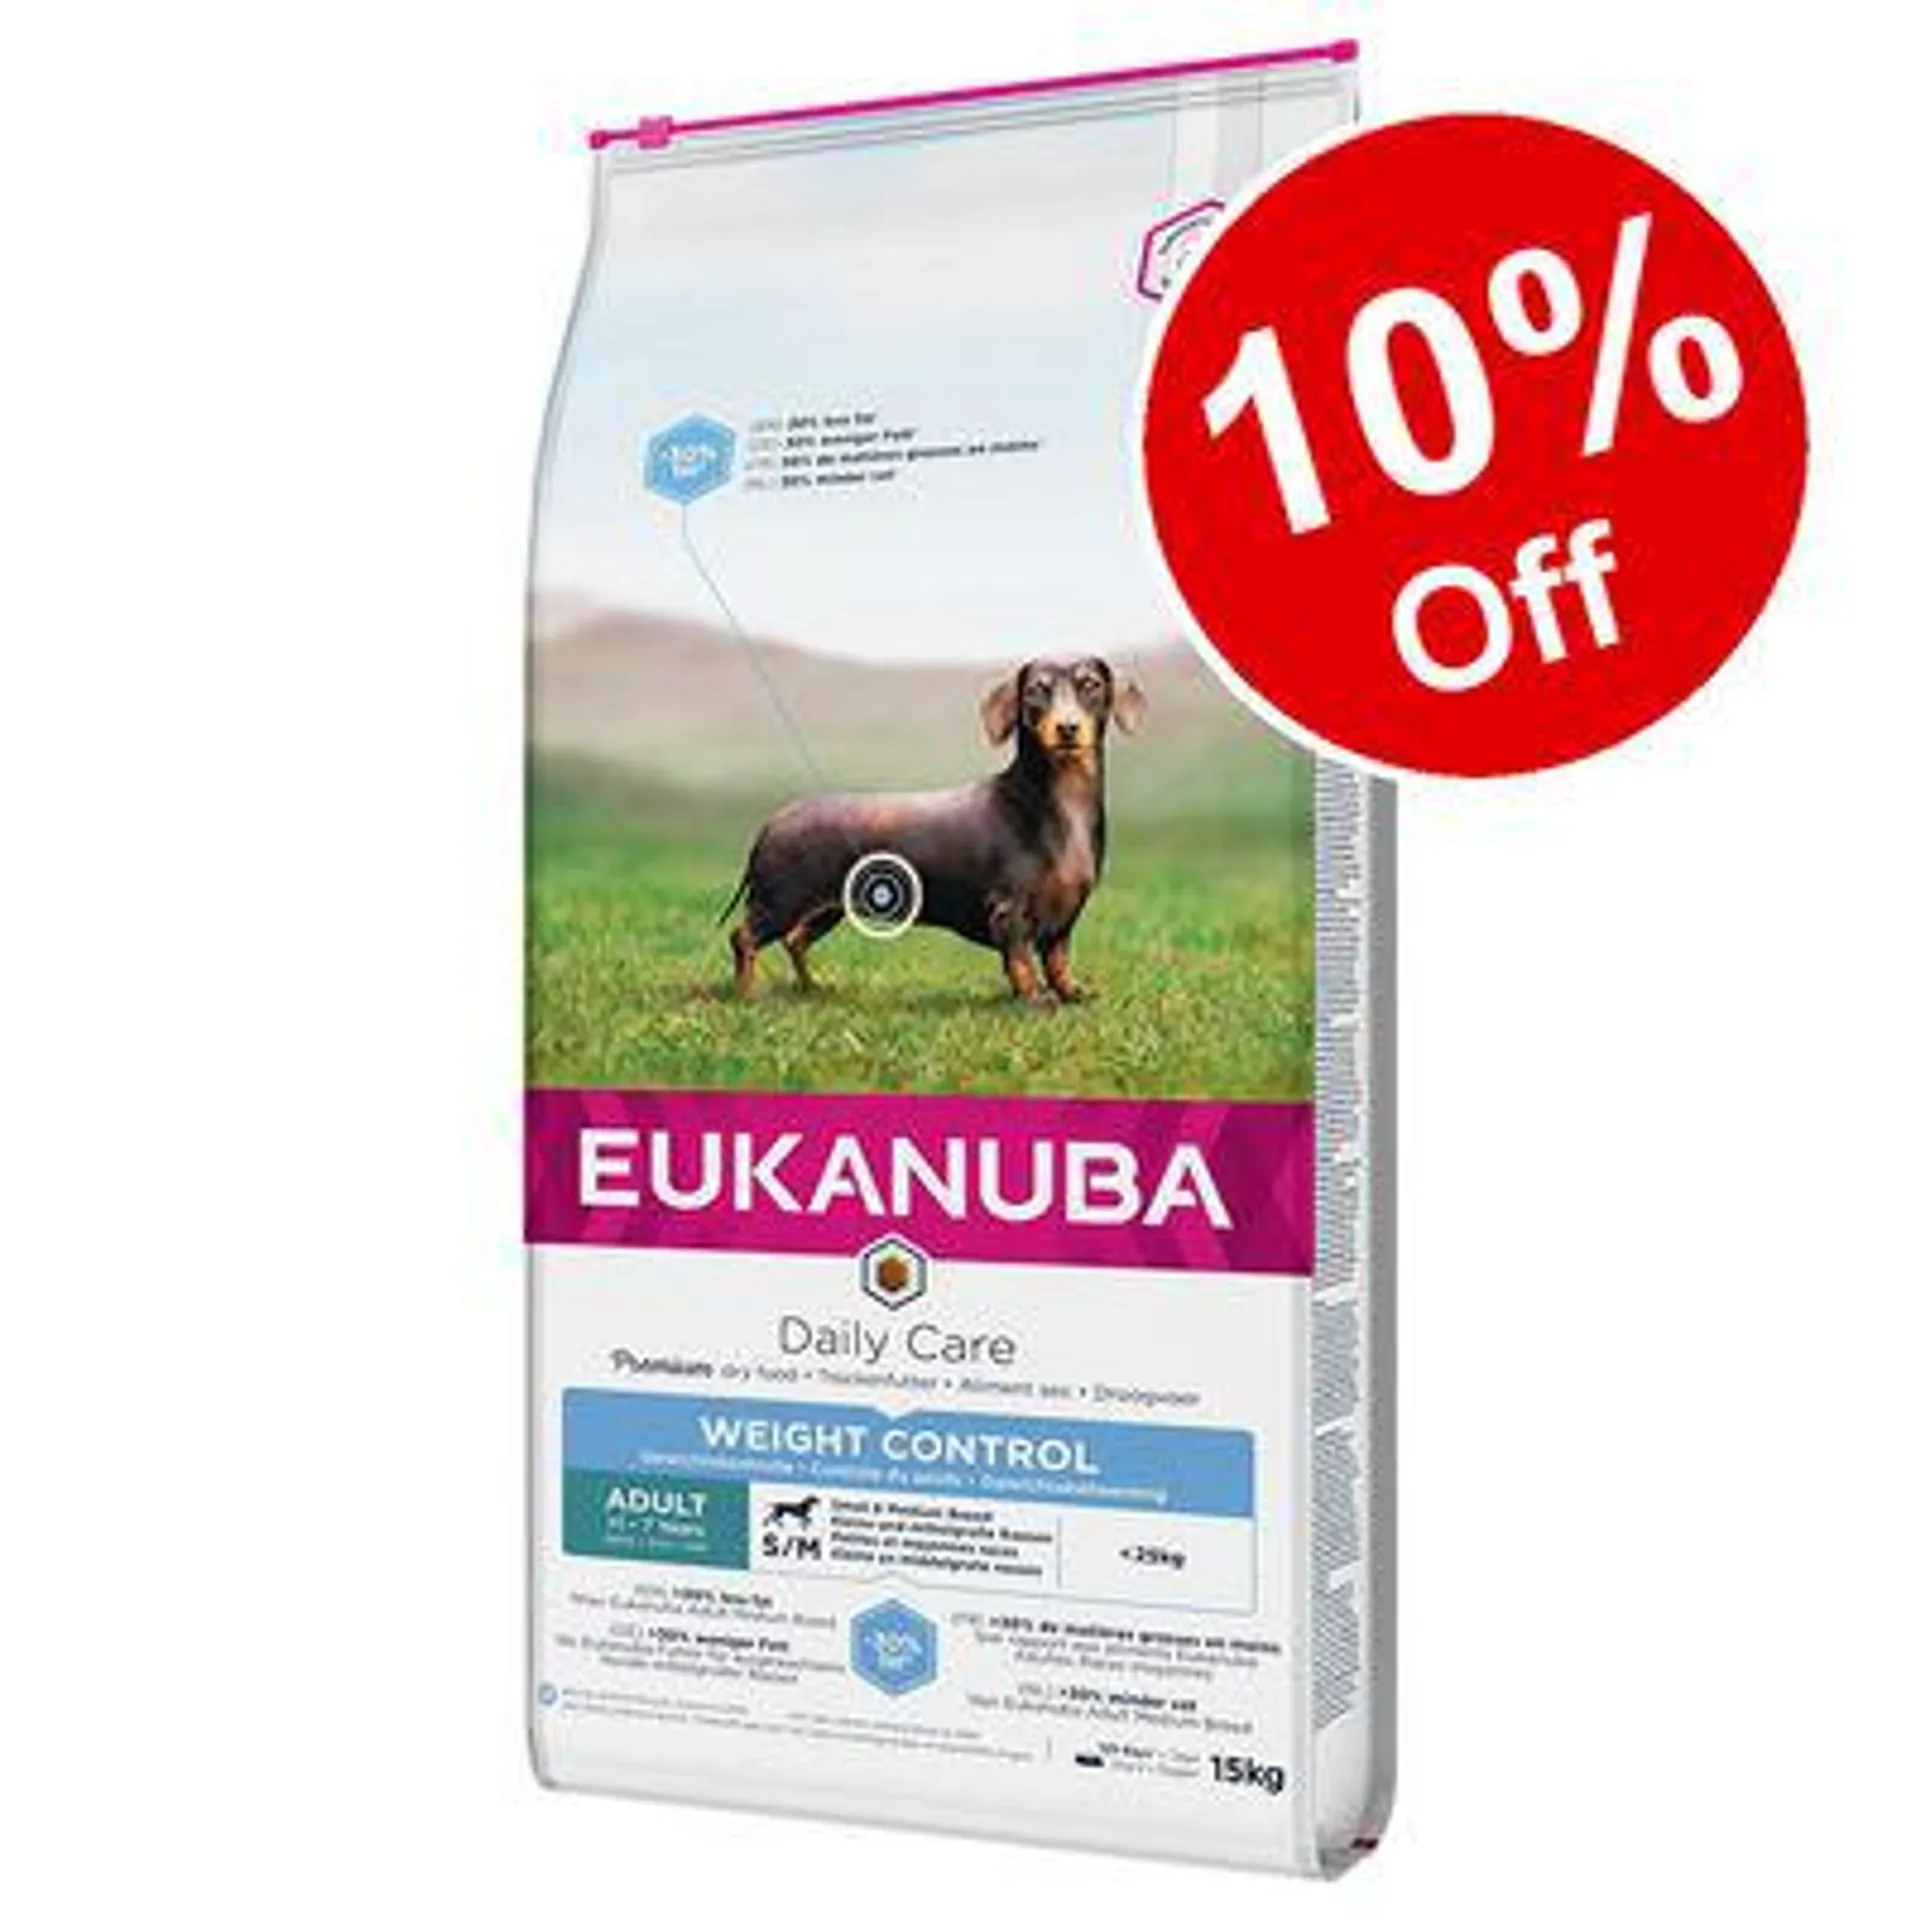 12kg/15kg Eukanuba Dry Dog Food - 10% Off! *